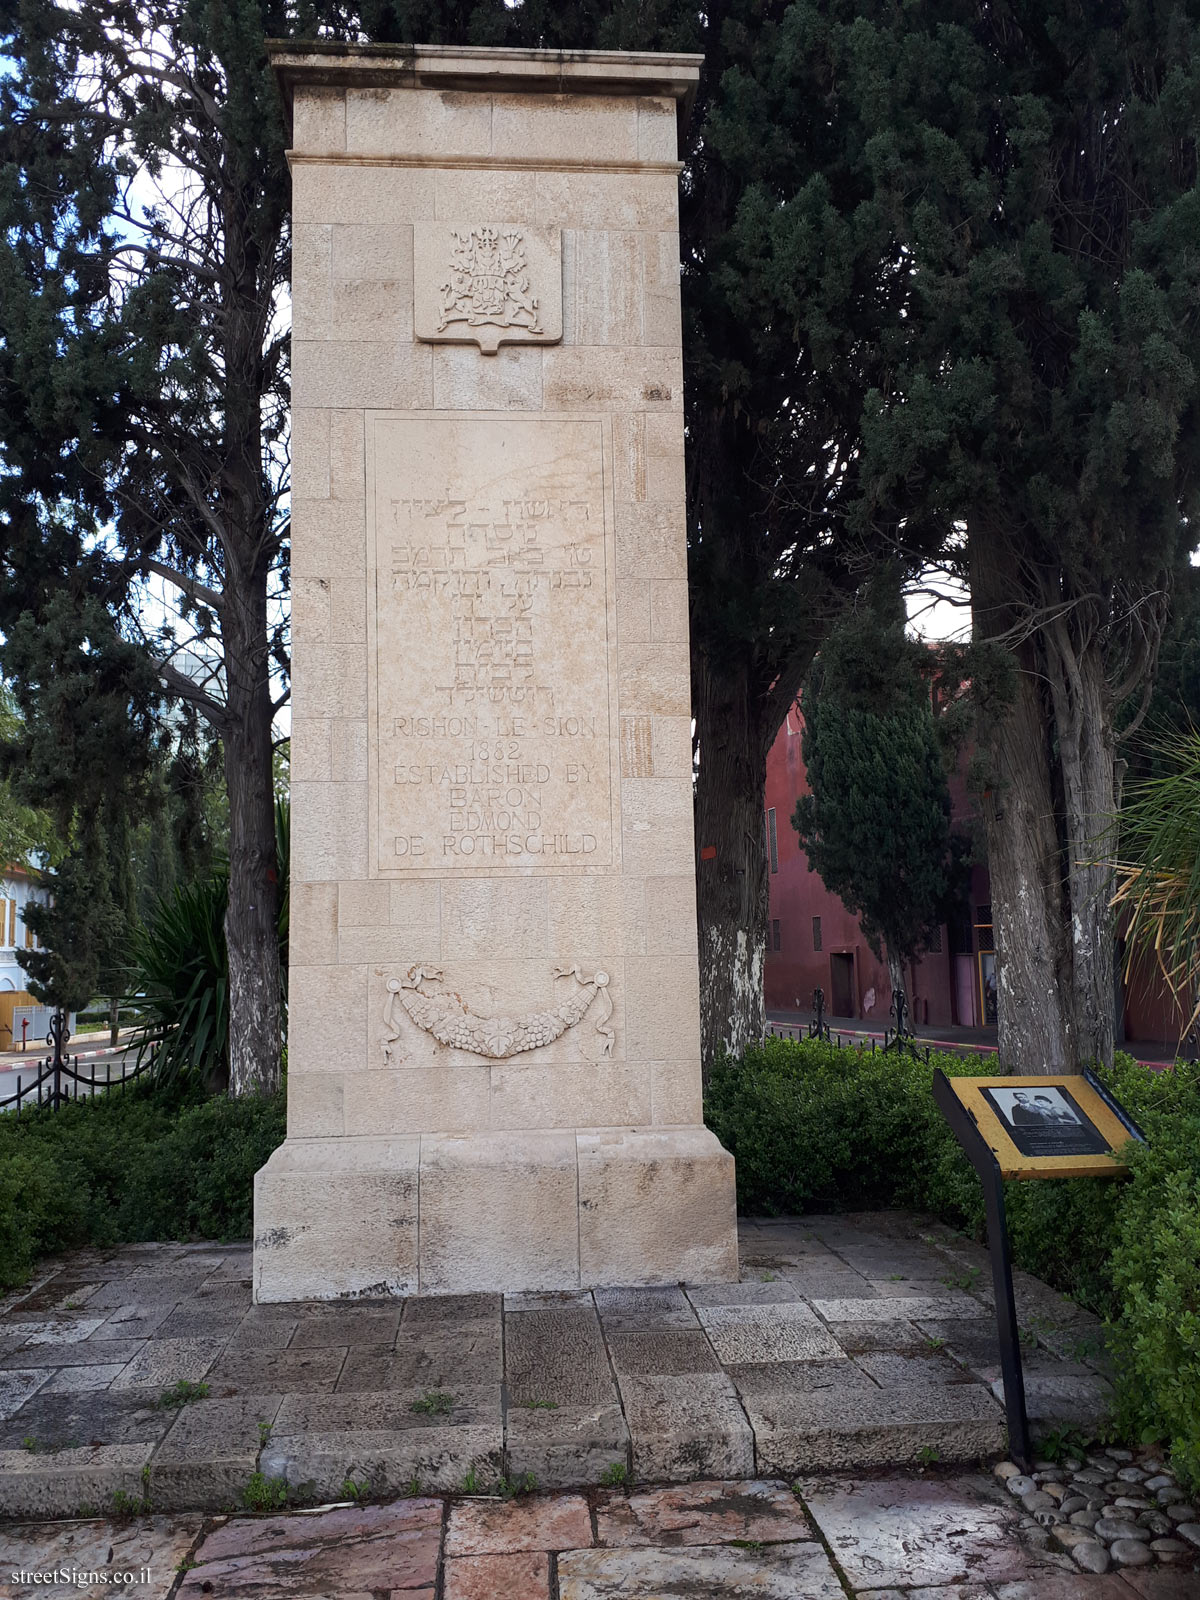 A monument in memory of Baron Edmond de Rothschild - Herzl St 91, Rishon LeTsiyon, Israel